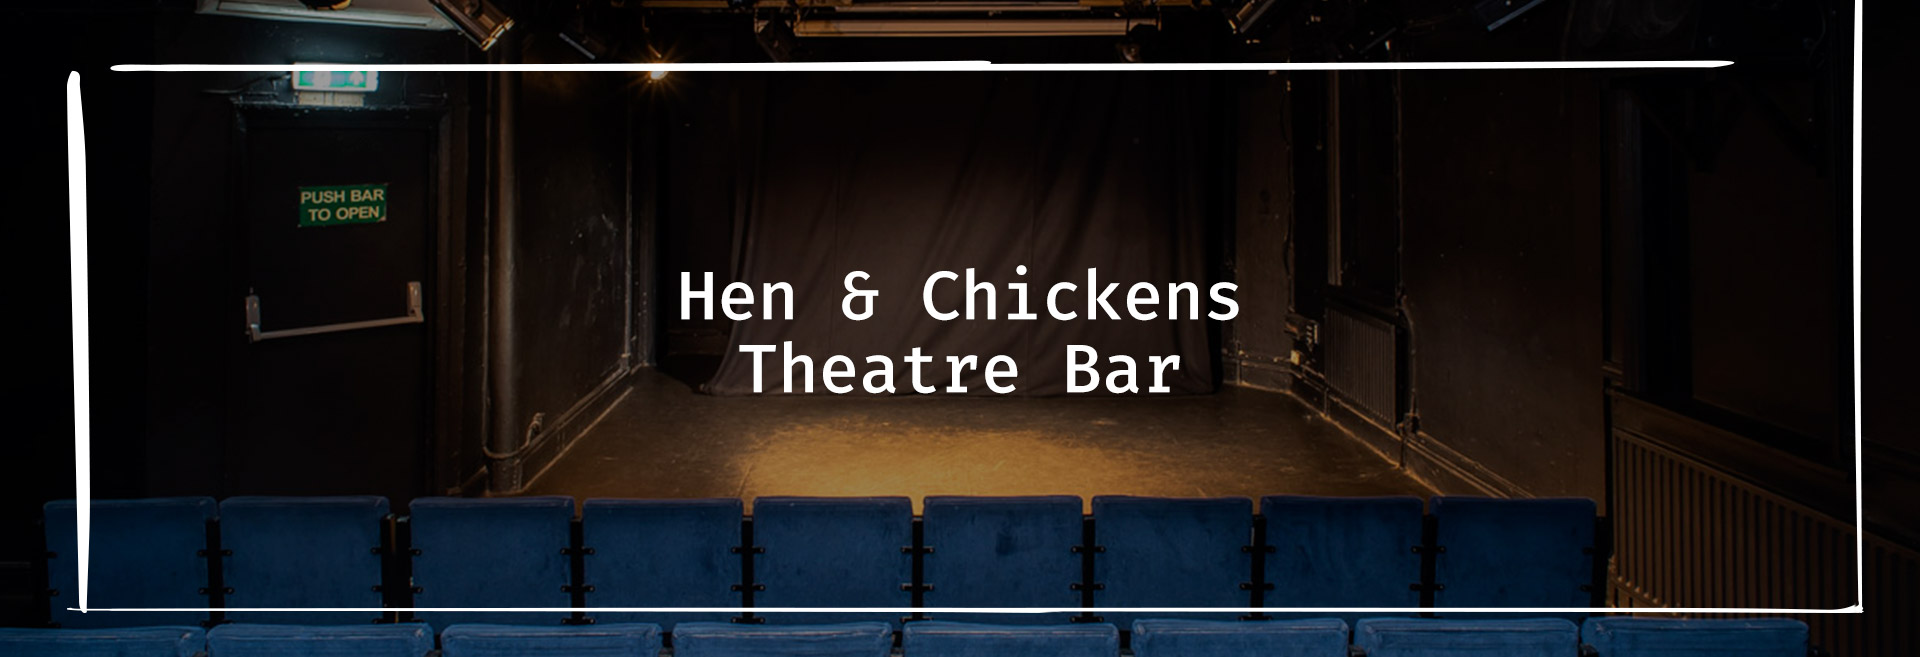 The Hen & Chickens Theatre Bar